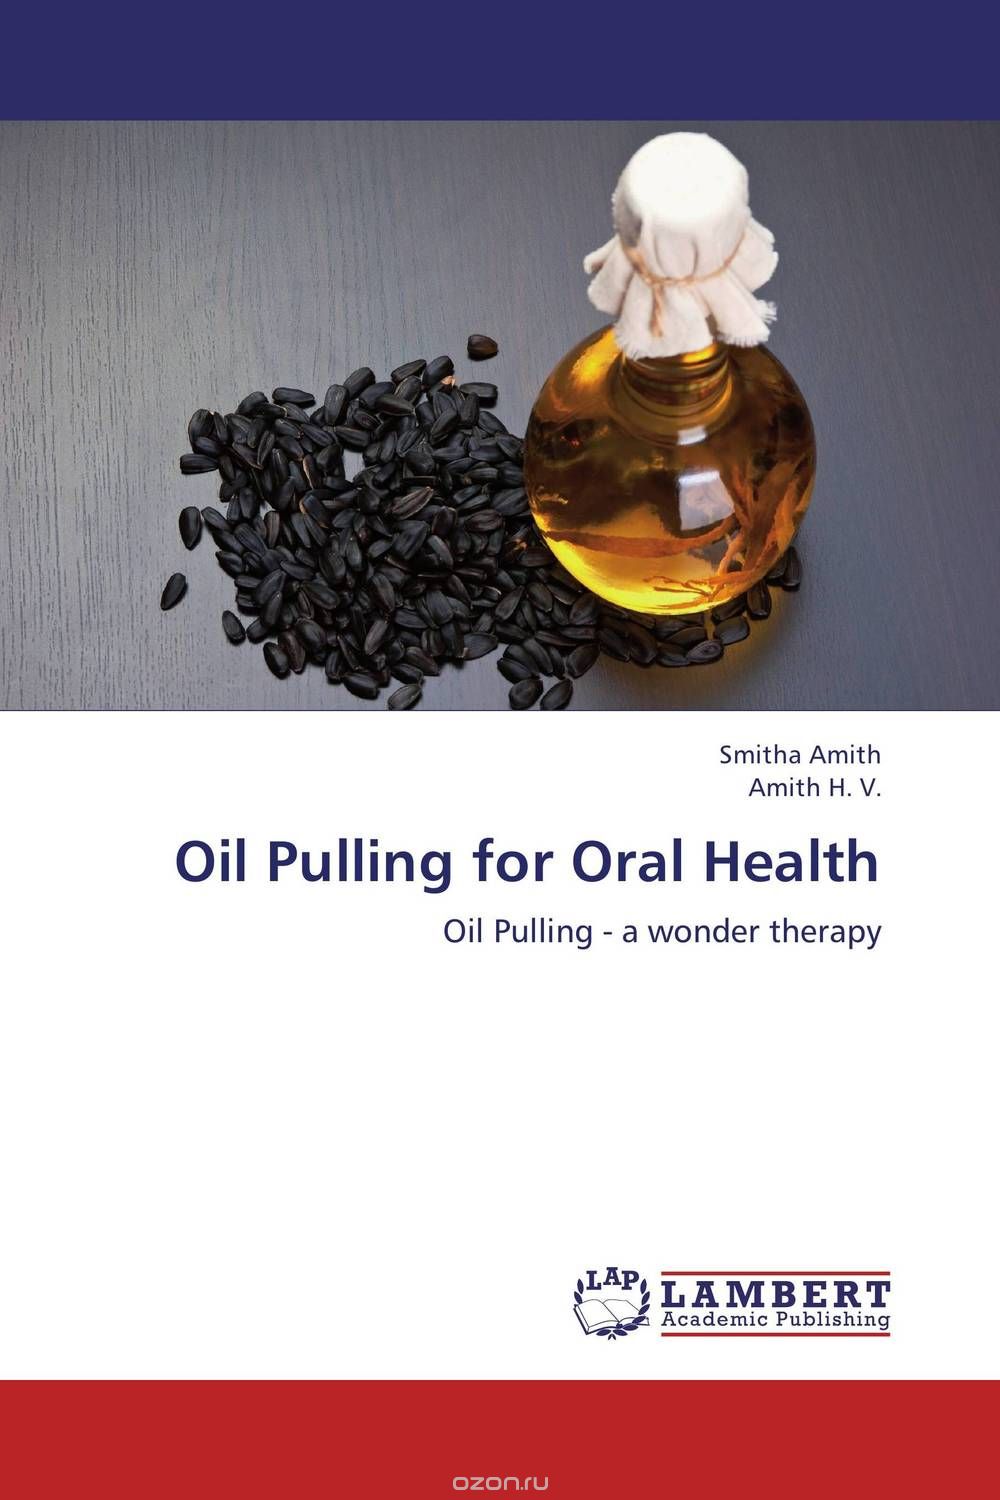 Скачать книгу "Oil Pulling for Oral Health"